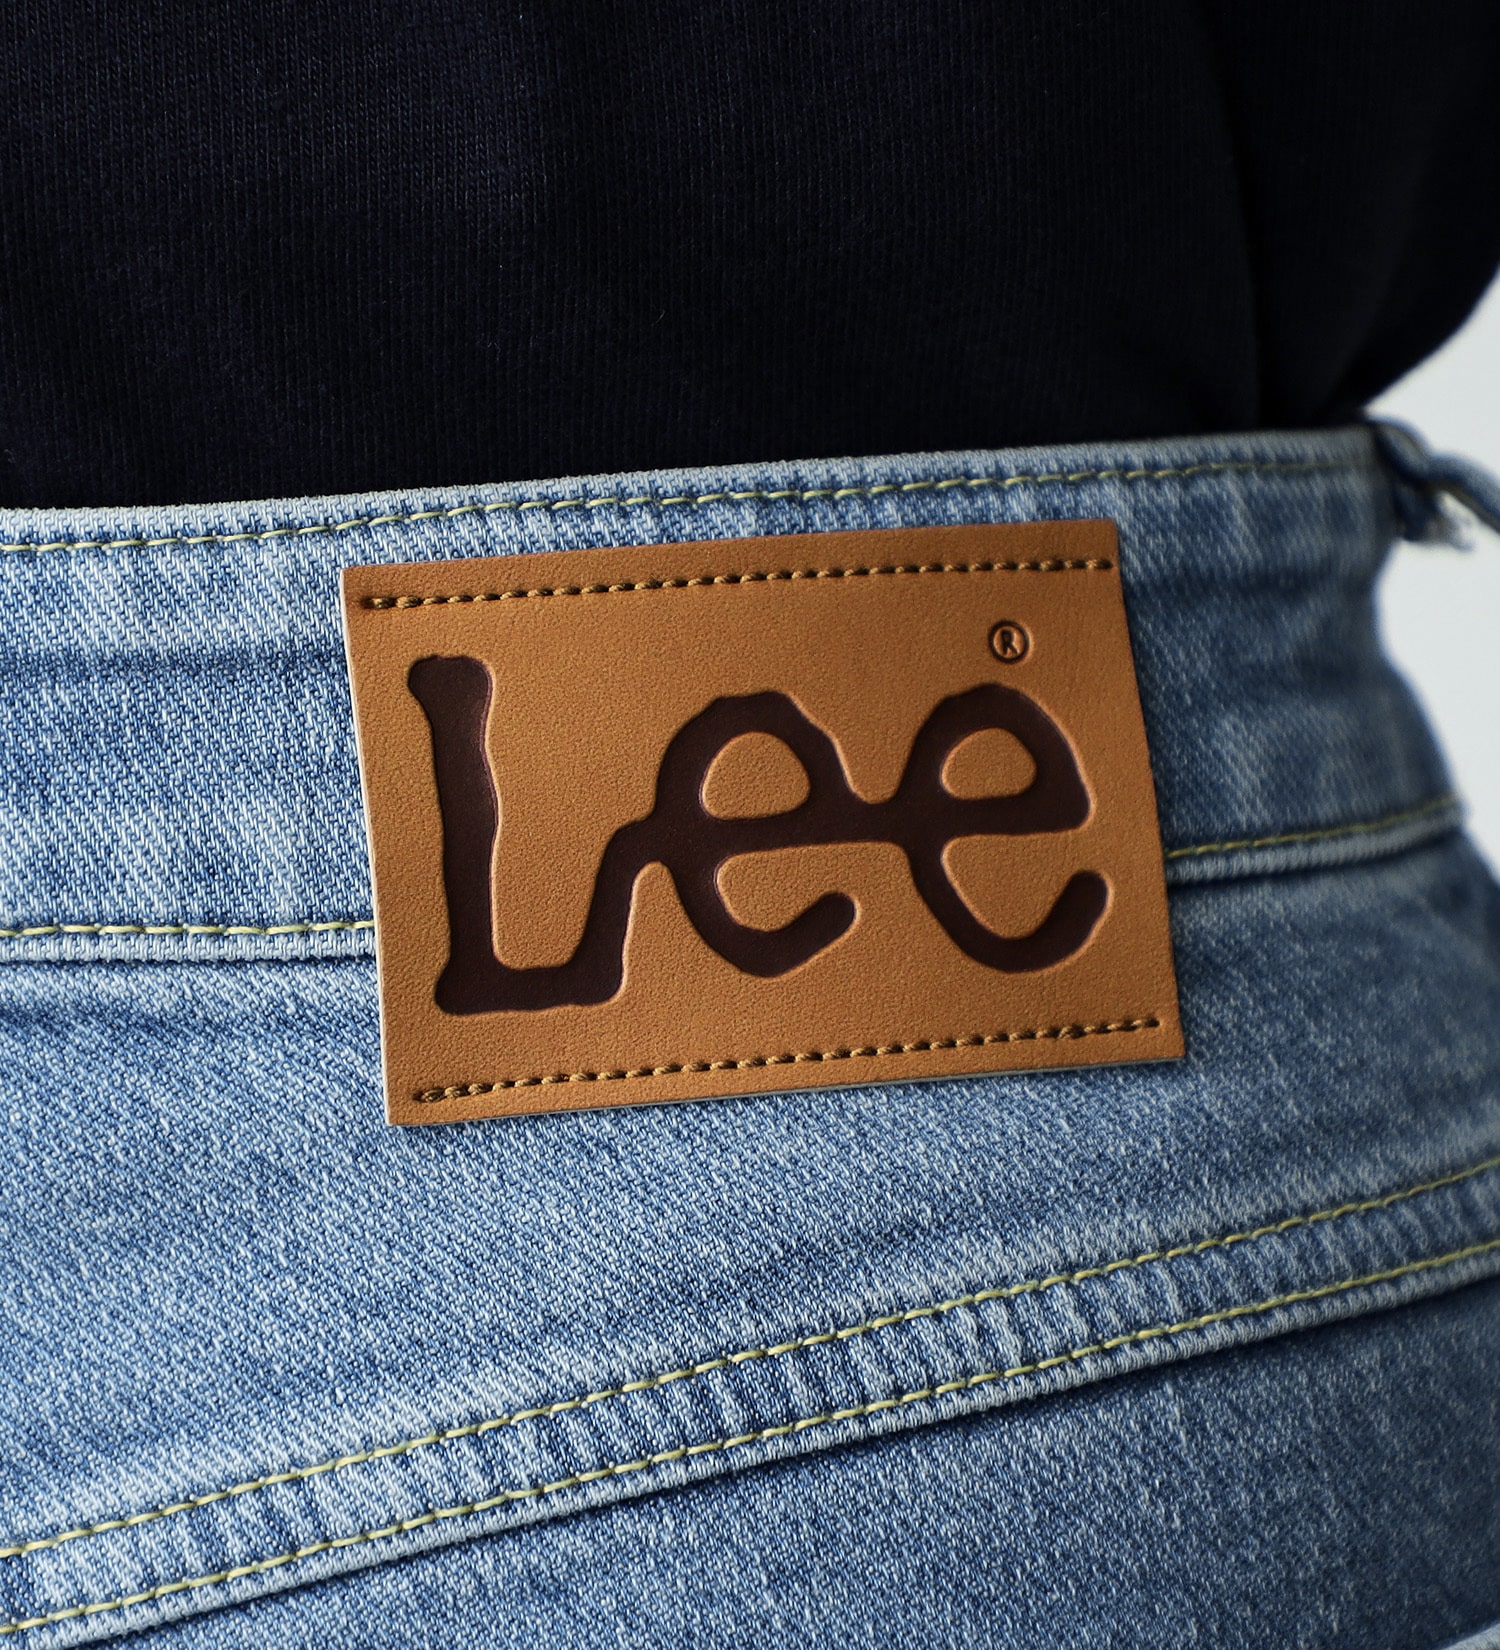 Lee(リー)の【会員クーポン対象】【カート割対象】【FINAL SALE】【Lee BABE】 スリムスキニーパンツ|パンツ/デニムパンツ/レディース|淡色ブルー